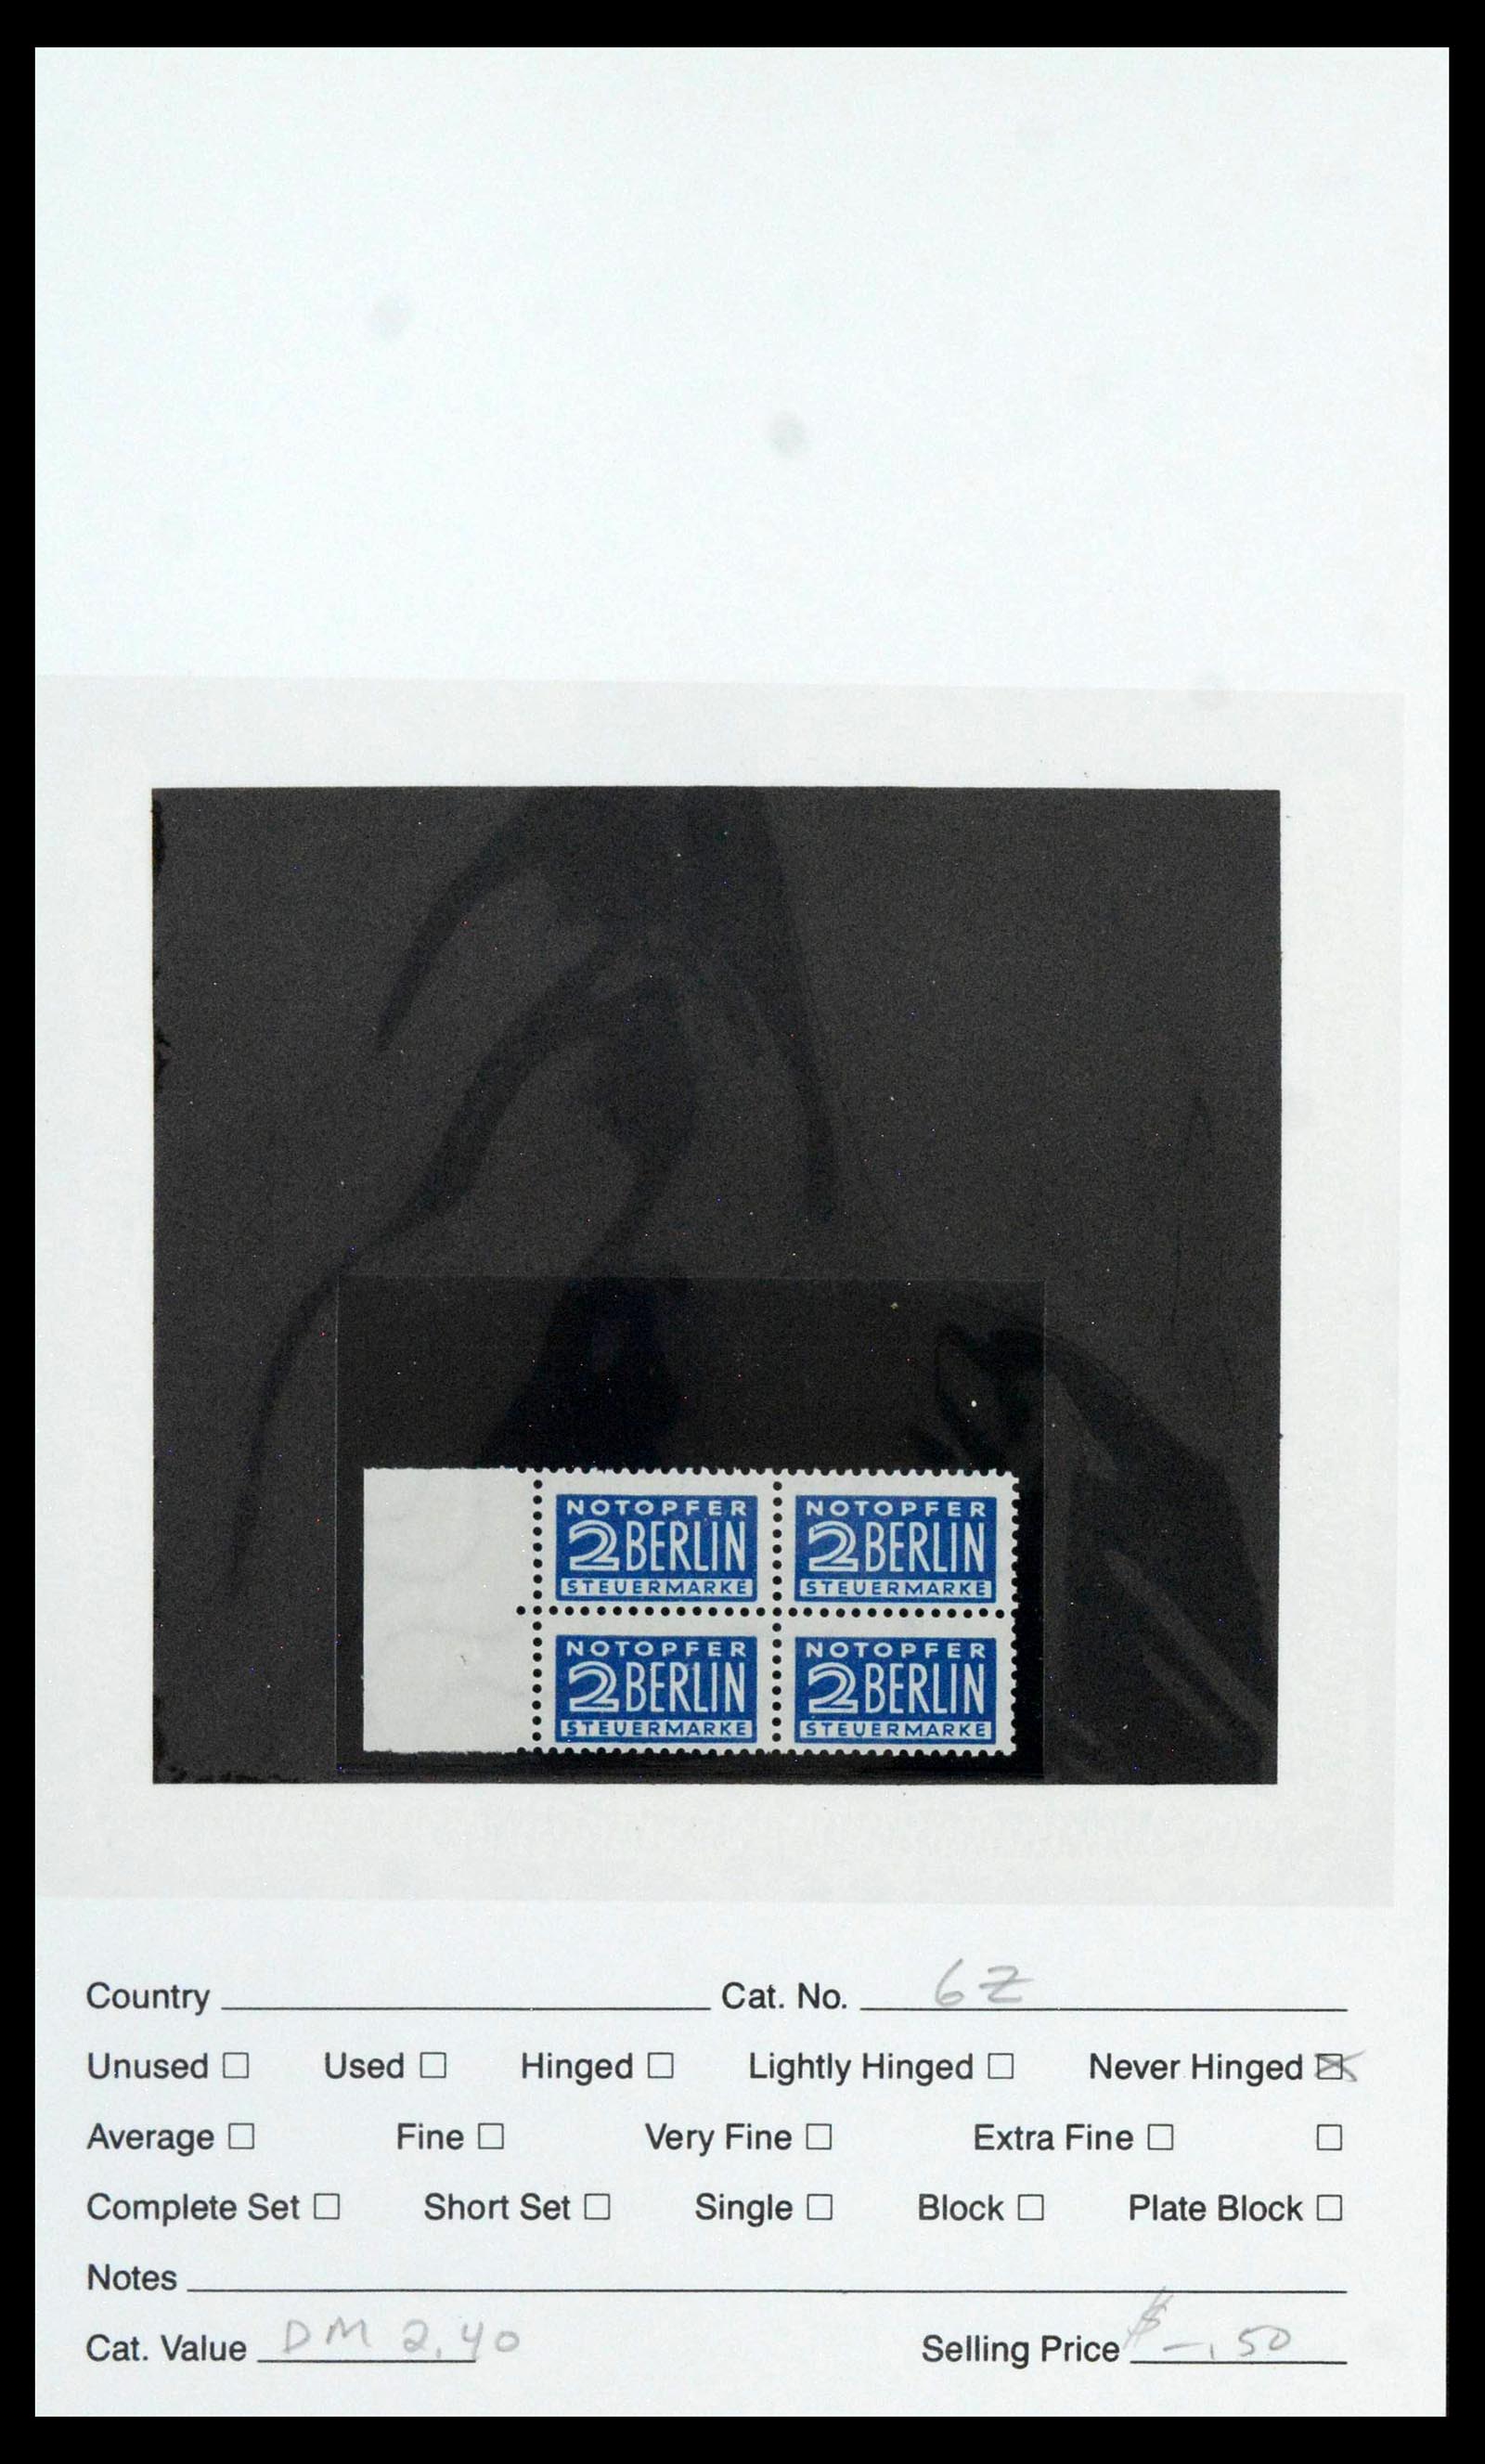 39459 0038 - Stamp collection 39459 Berlin notopfer 1948-1949.